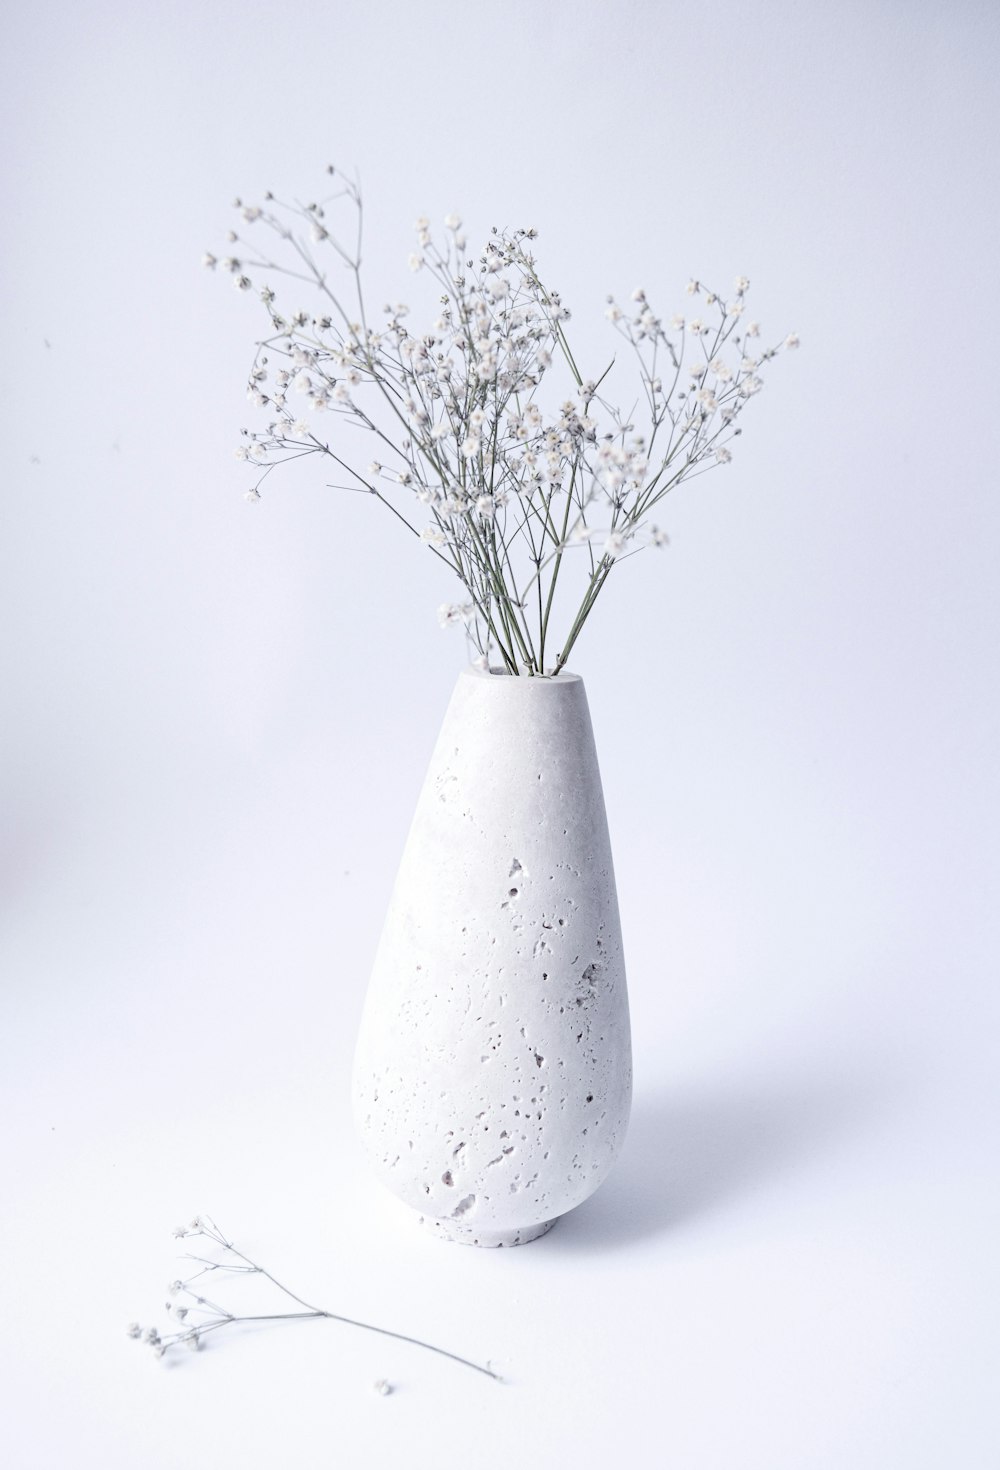 white ceramic vase with green plant